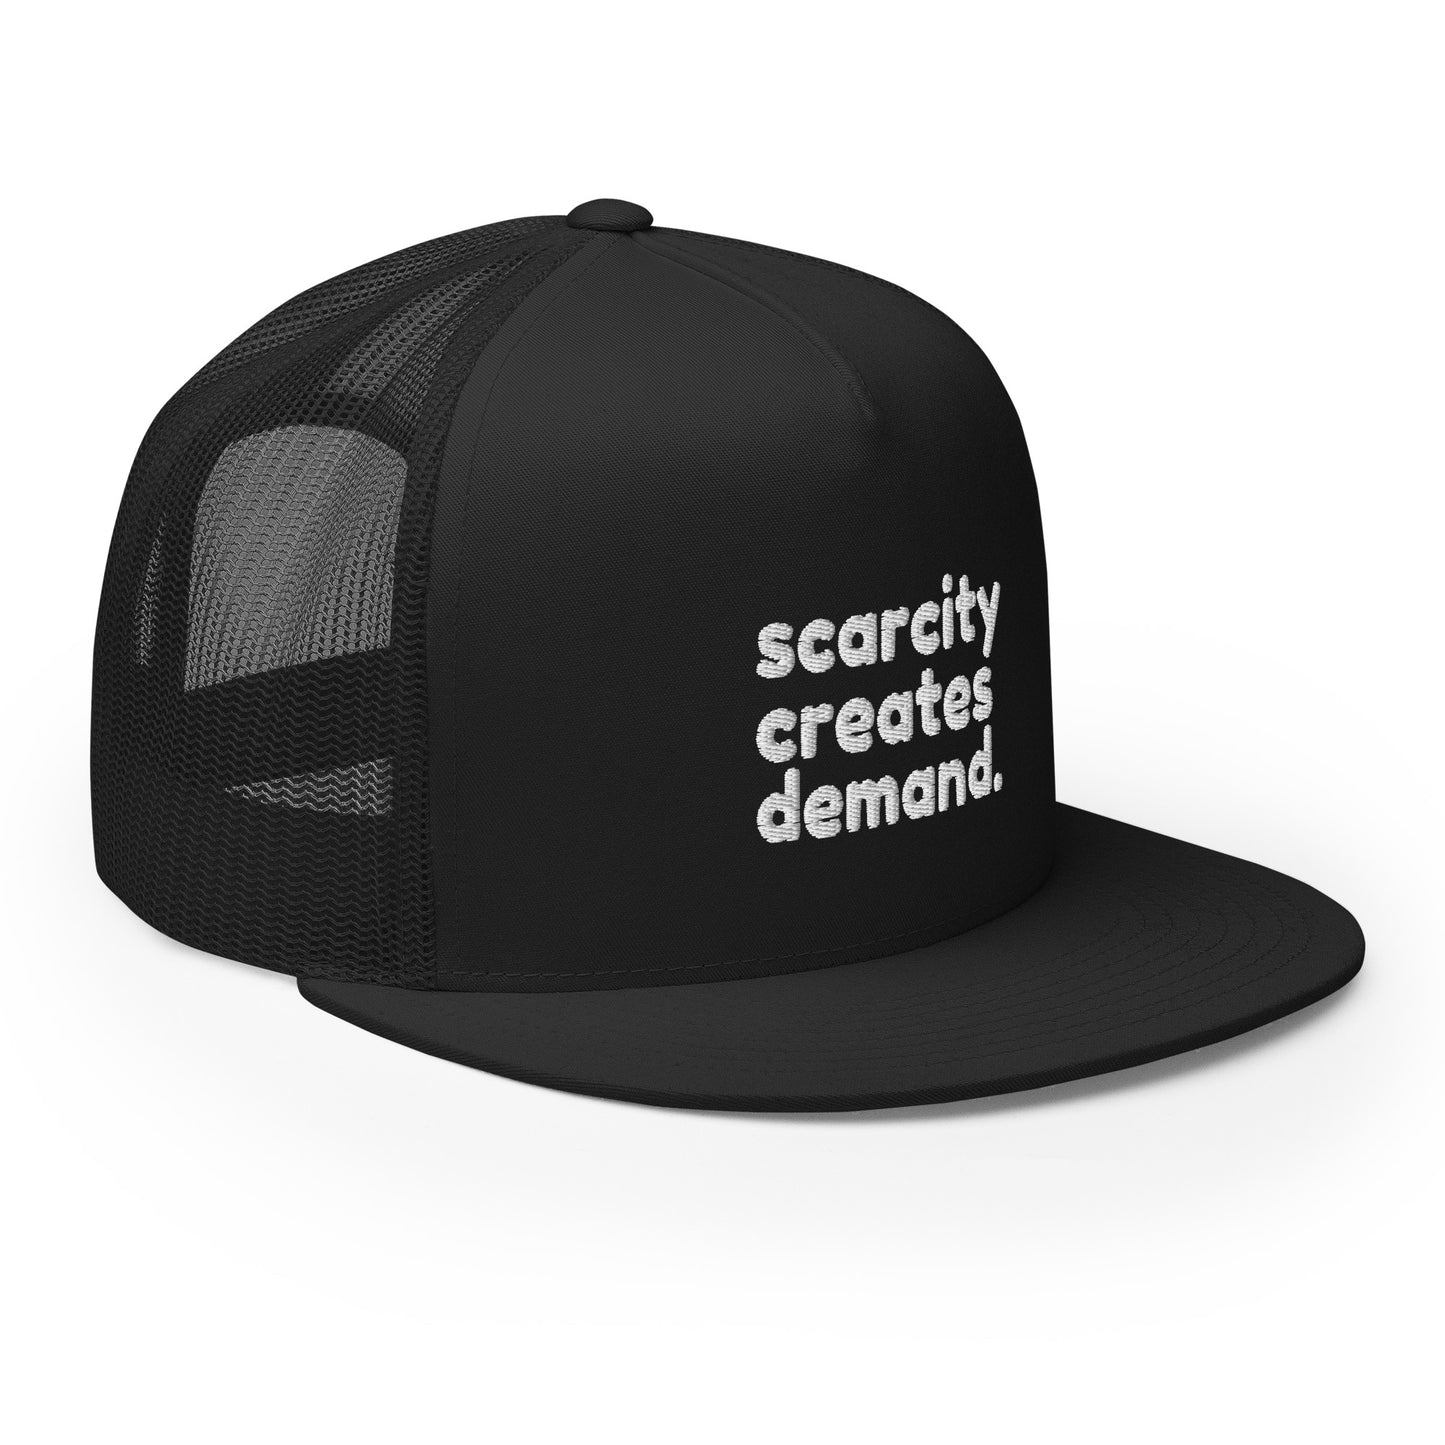 PLUSH BOY BLACKBURRY "SCARCITY CREATES DEMAND" Snap Back Hat